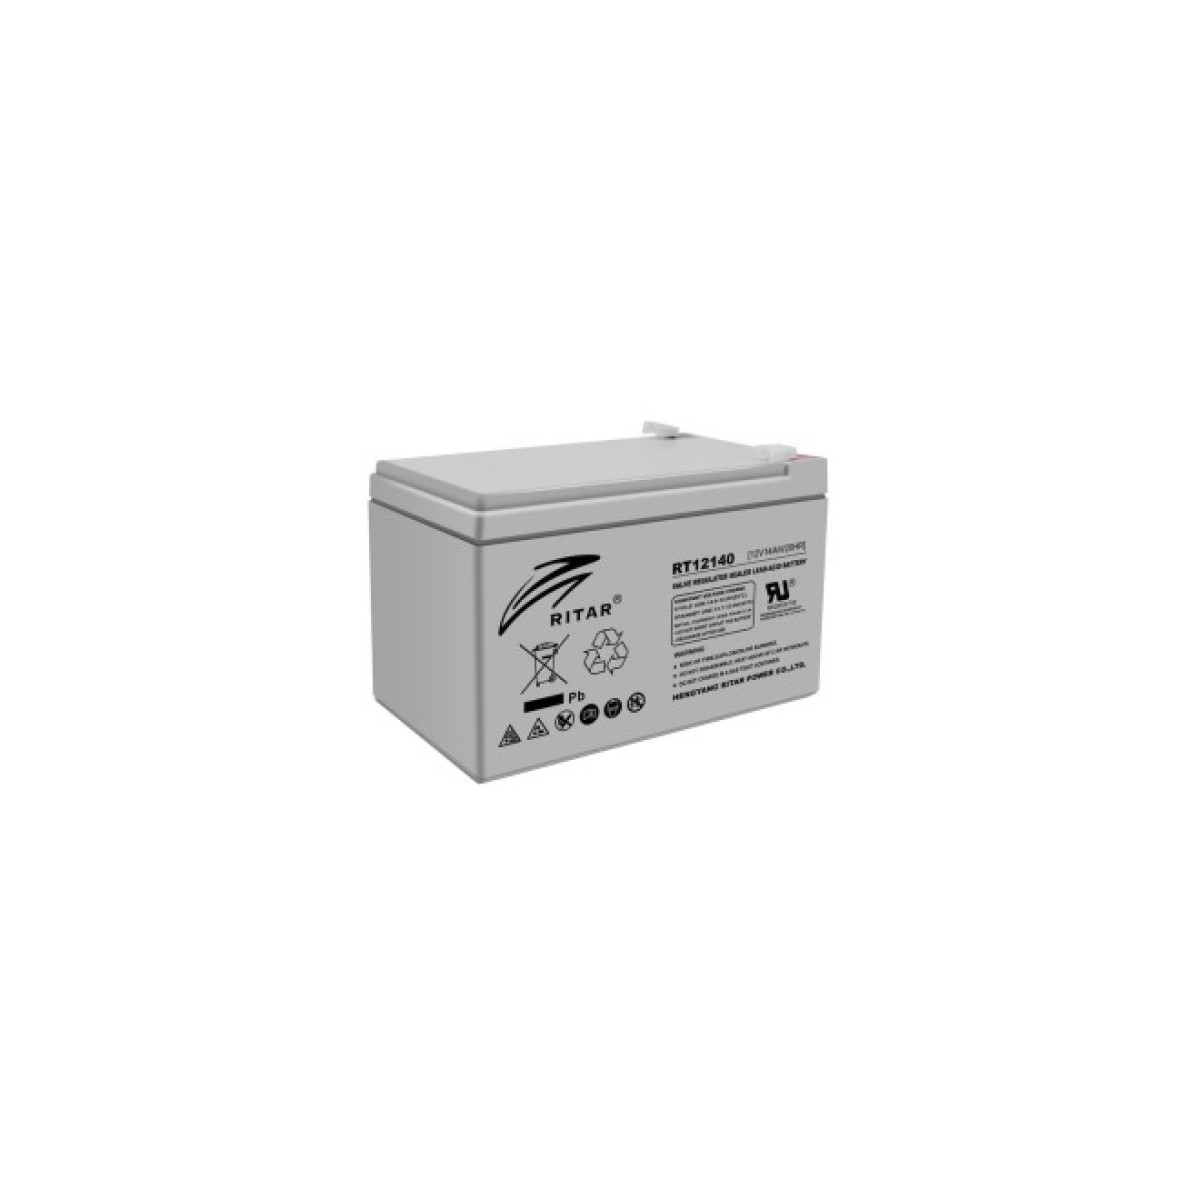 Батарея к ИБП Ritar AGM RT12140, 12V-14Ah (RT12140H) 256_256.jpg